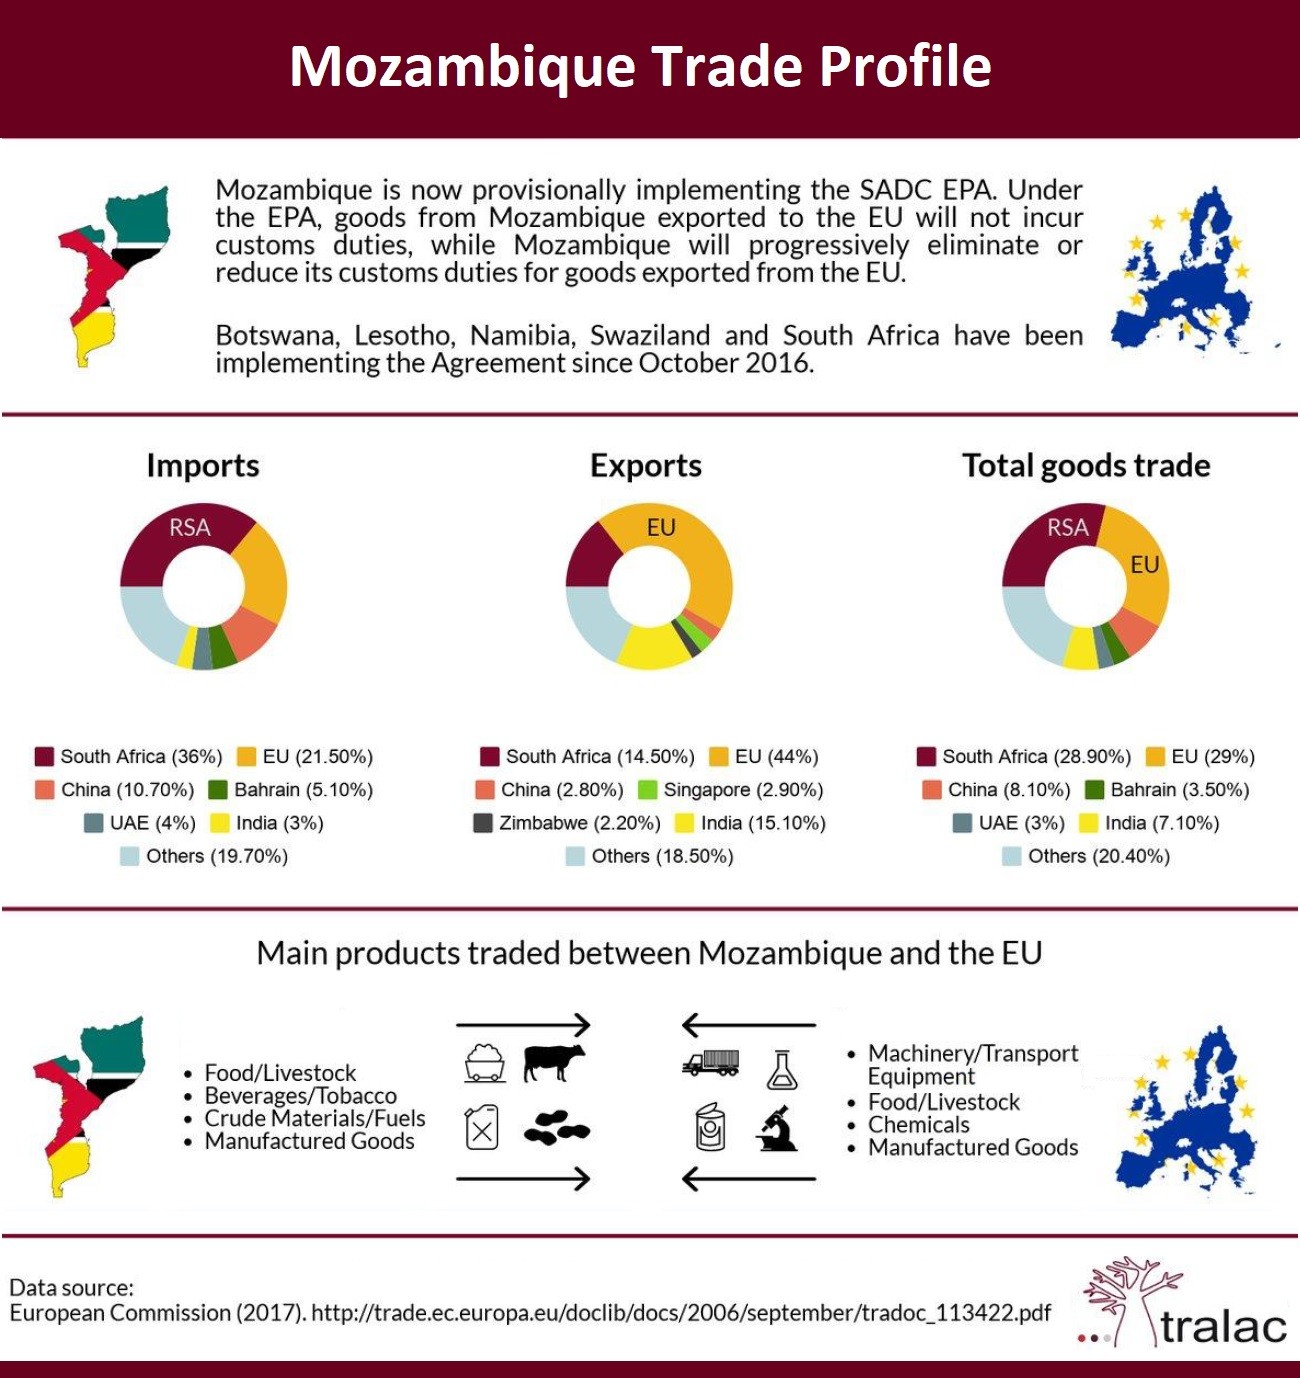 SADC-EU Economic Partnership Agreement: Mozambique Trade Profile